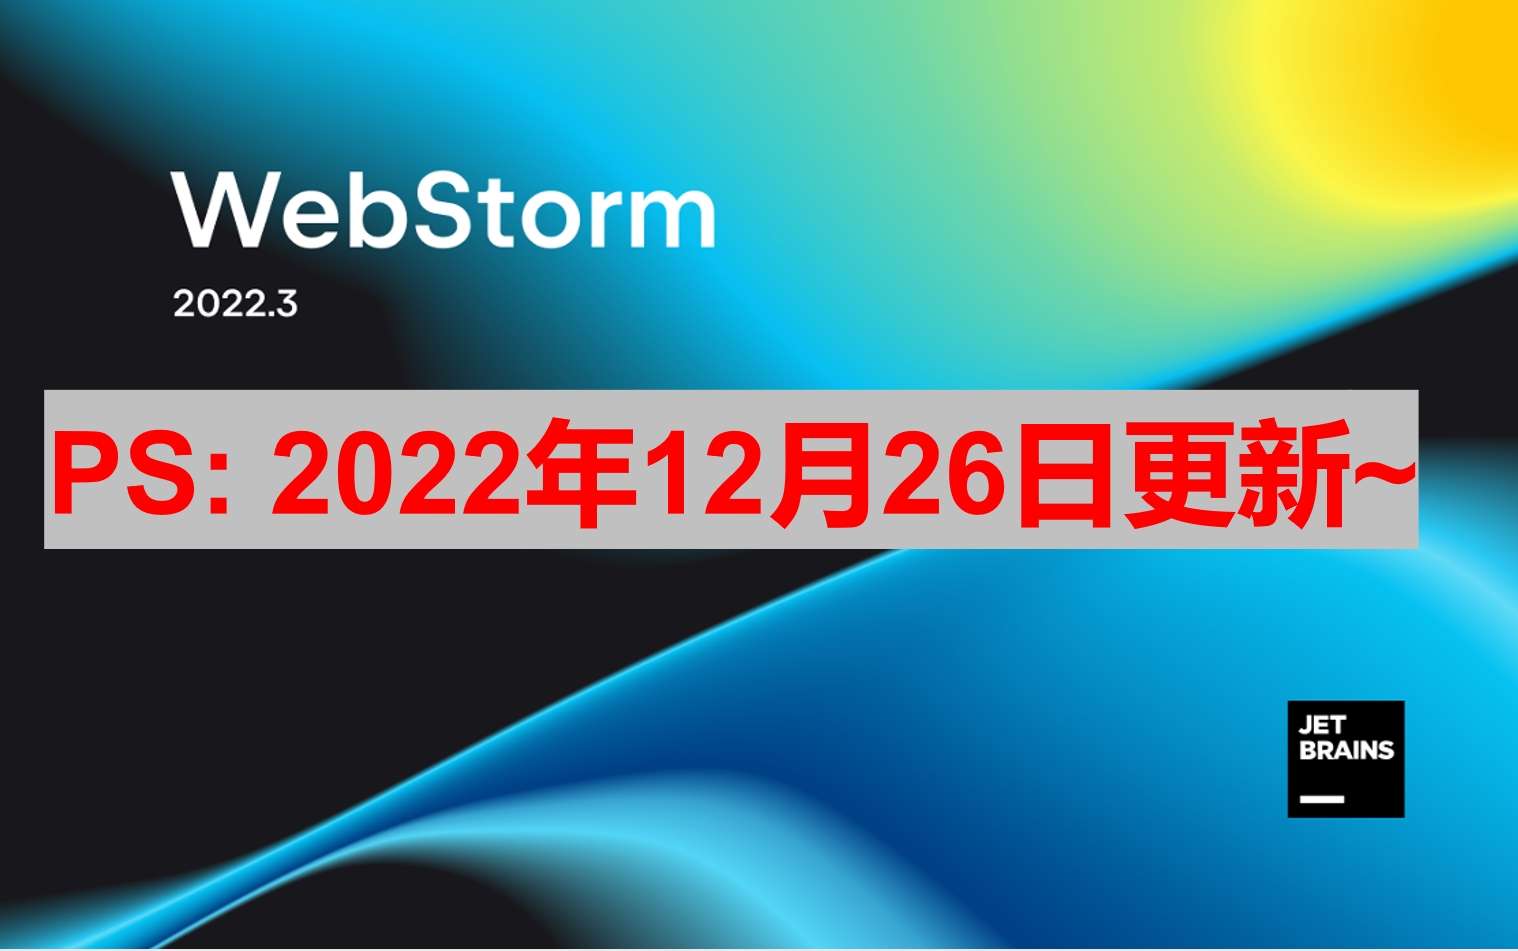 Webstorm 2022.3.1 版本启动界面